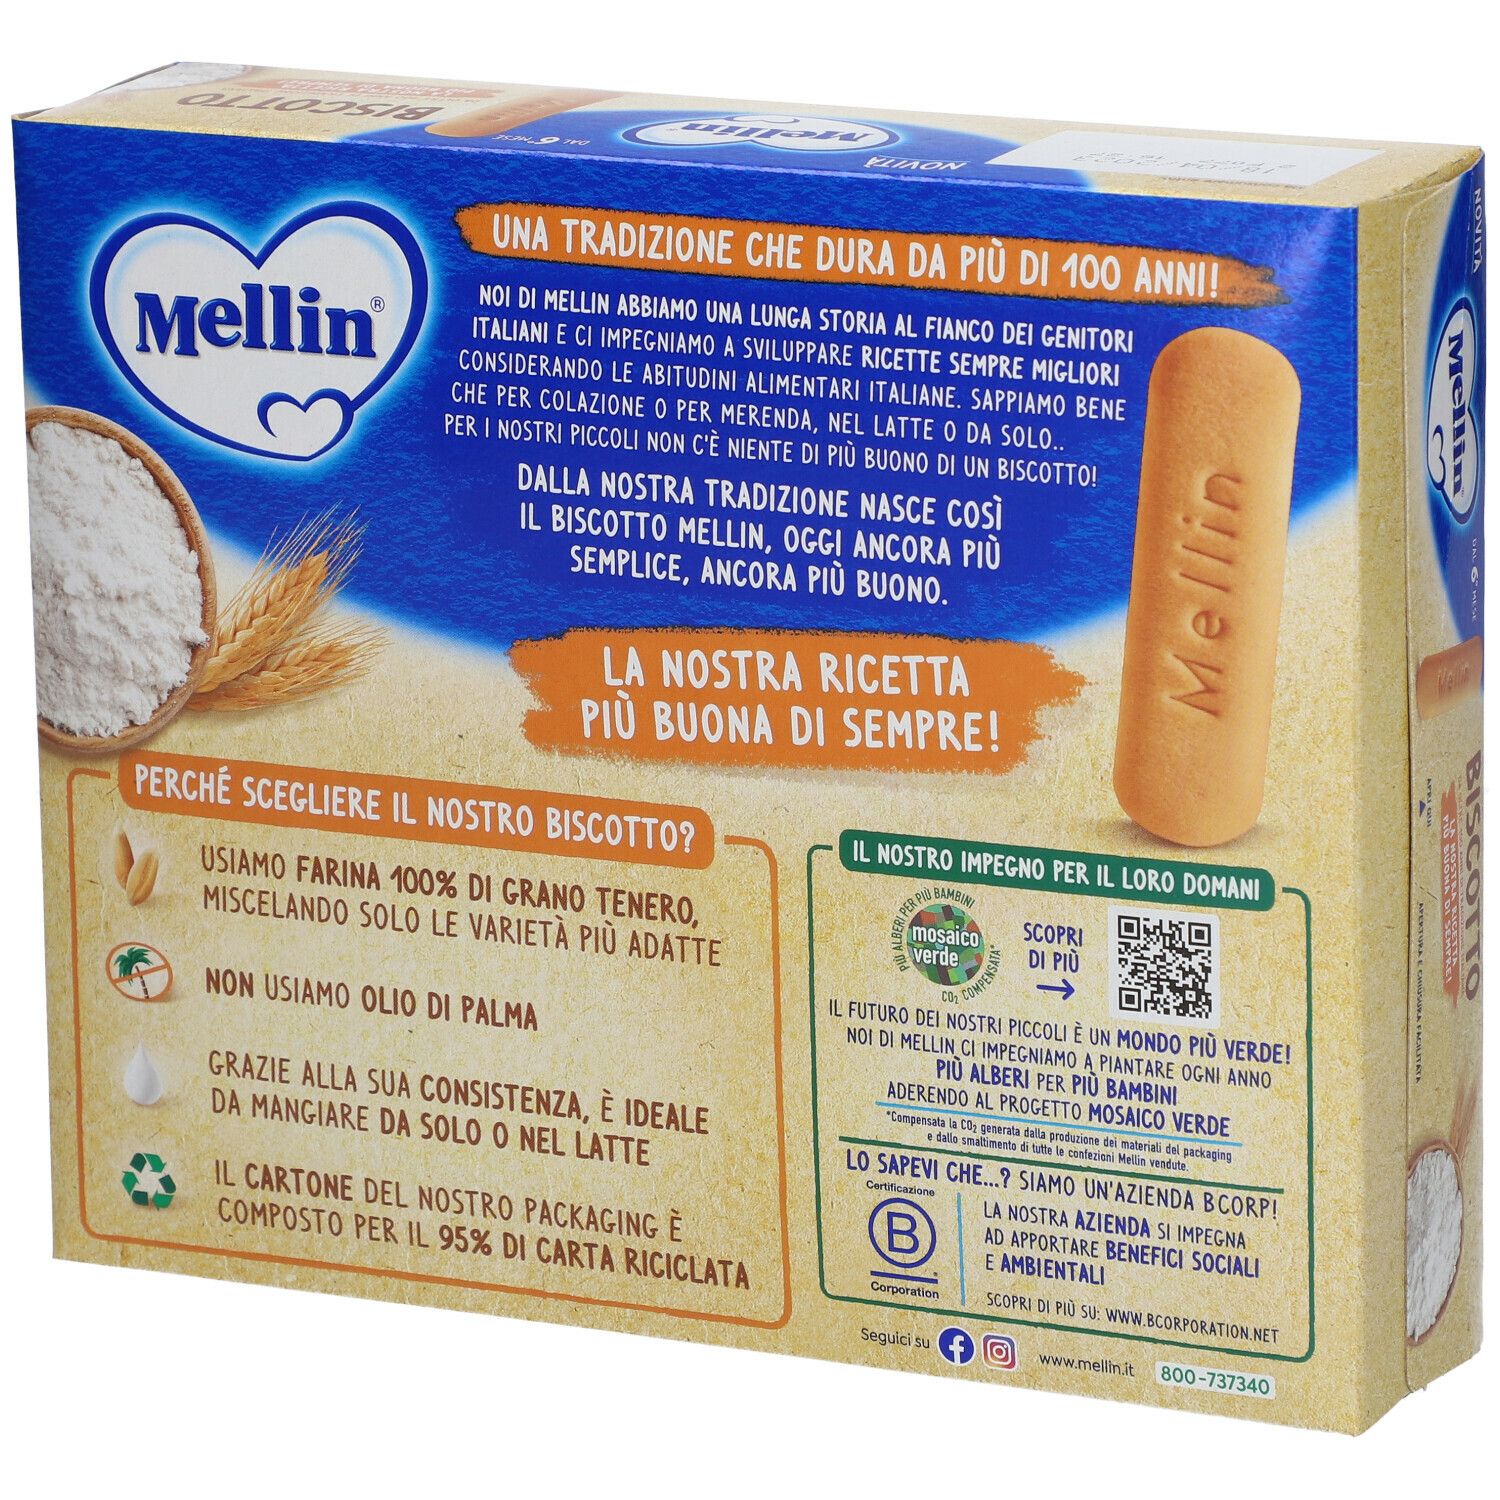 Mellin® Biscotto